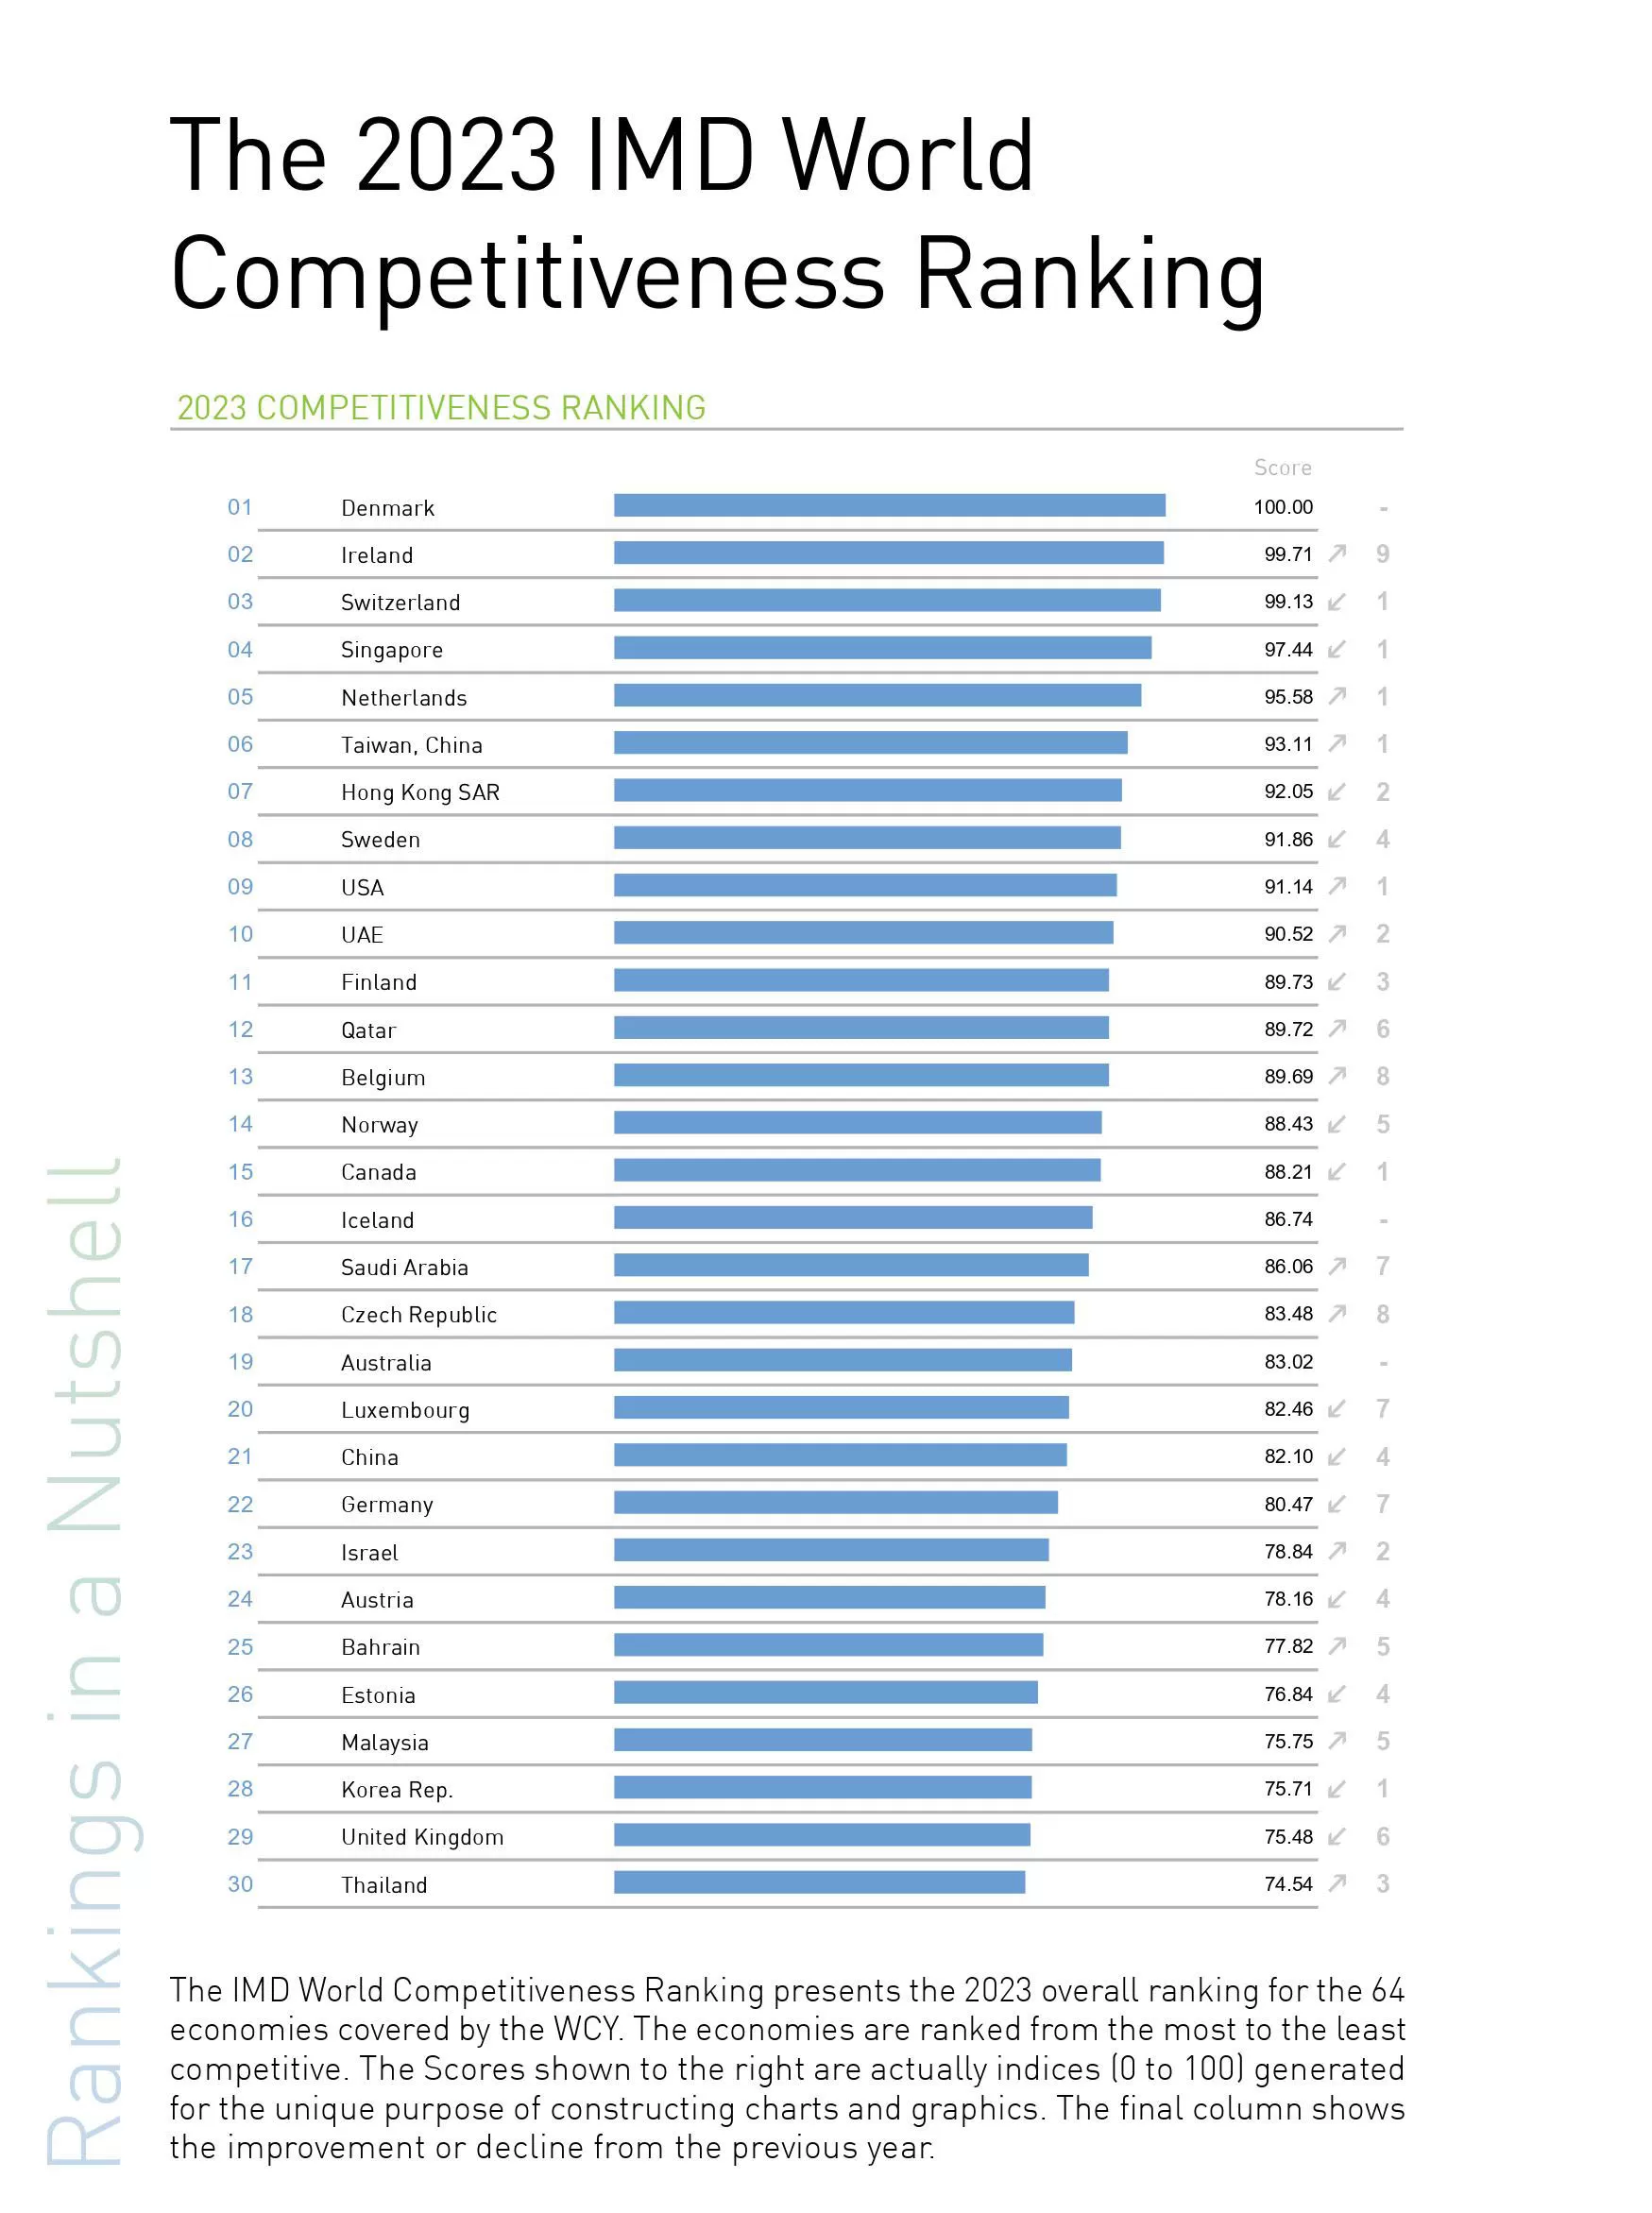 IMD World Competitiveness Rankings 2023